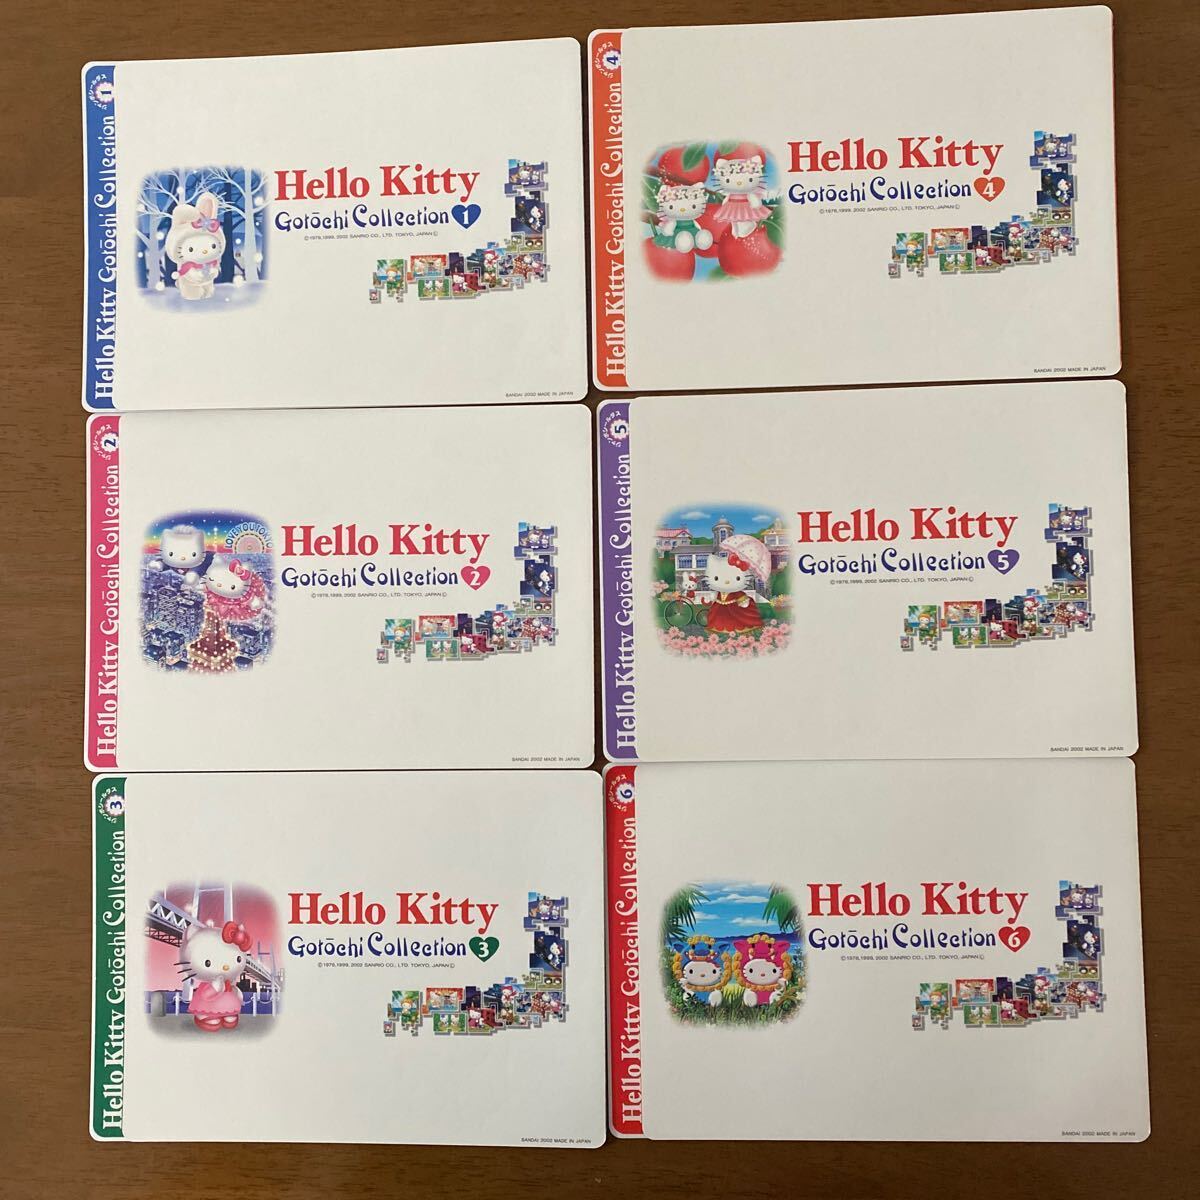  Bandai jumbo наклейка das Hello Kitty . данный земля коллекция 1~6 6 шт. комплект 